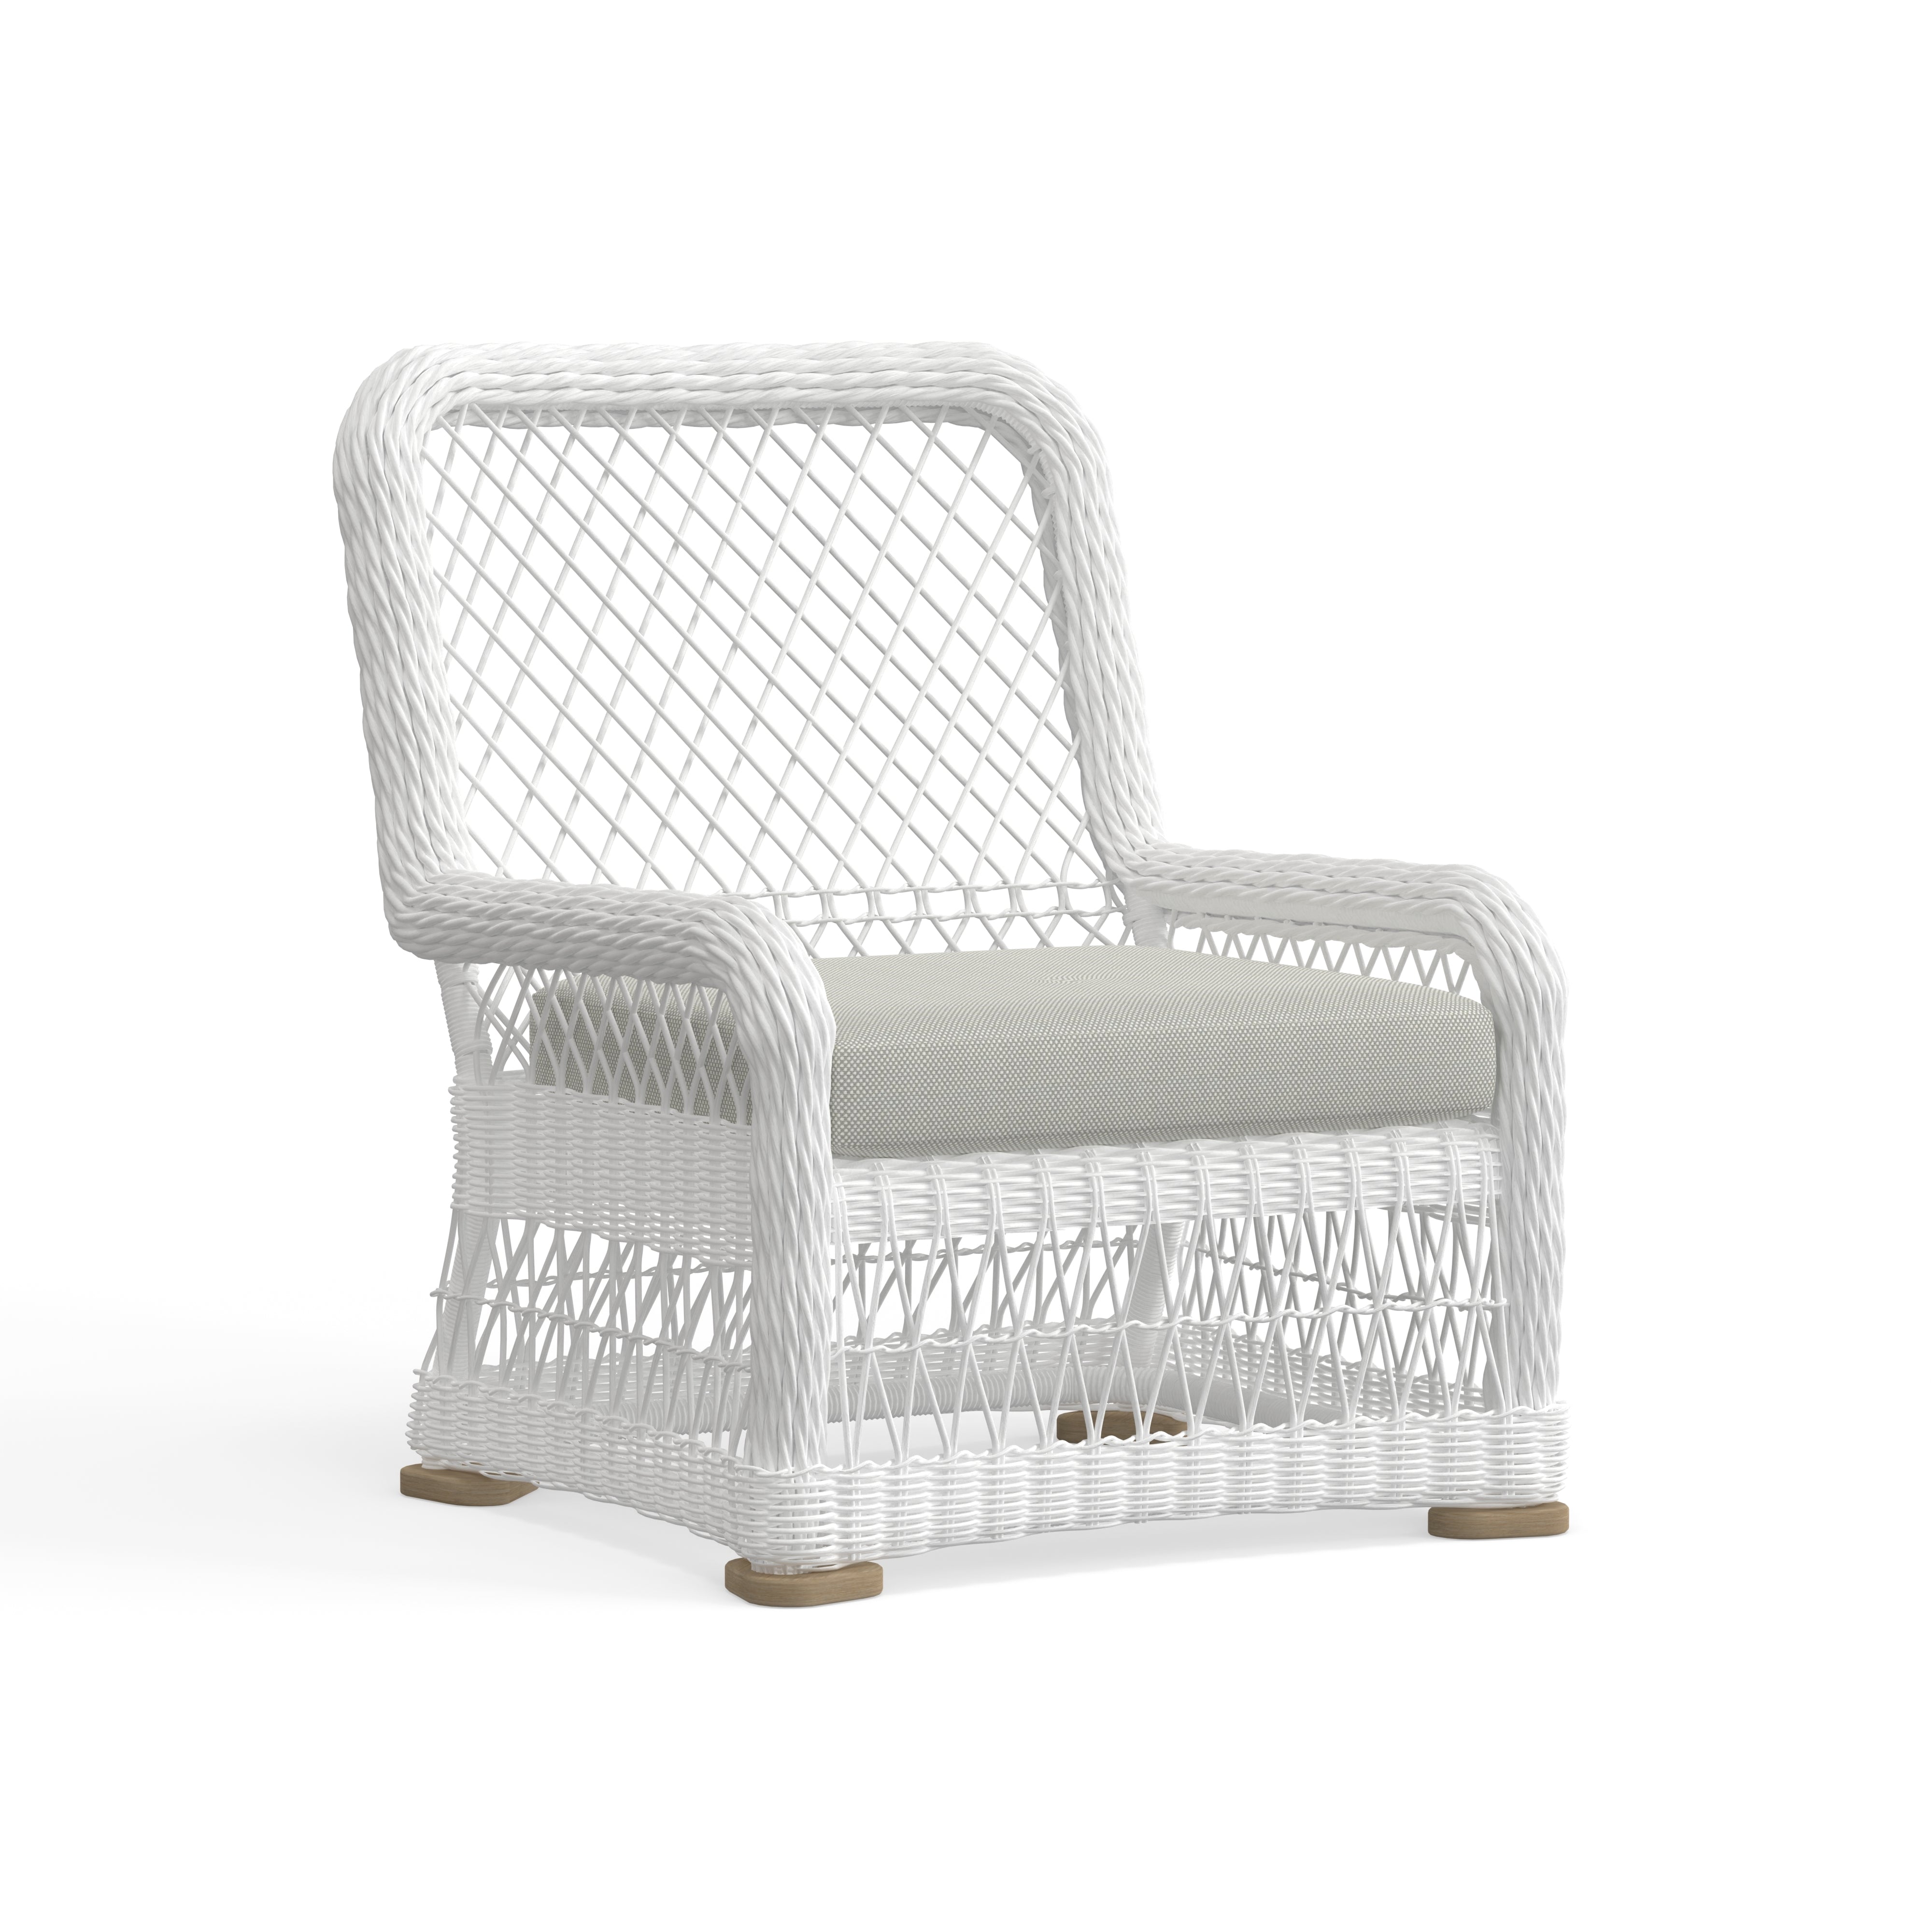 White Wicker Megan Stokes Home Chairs